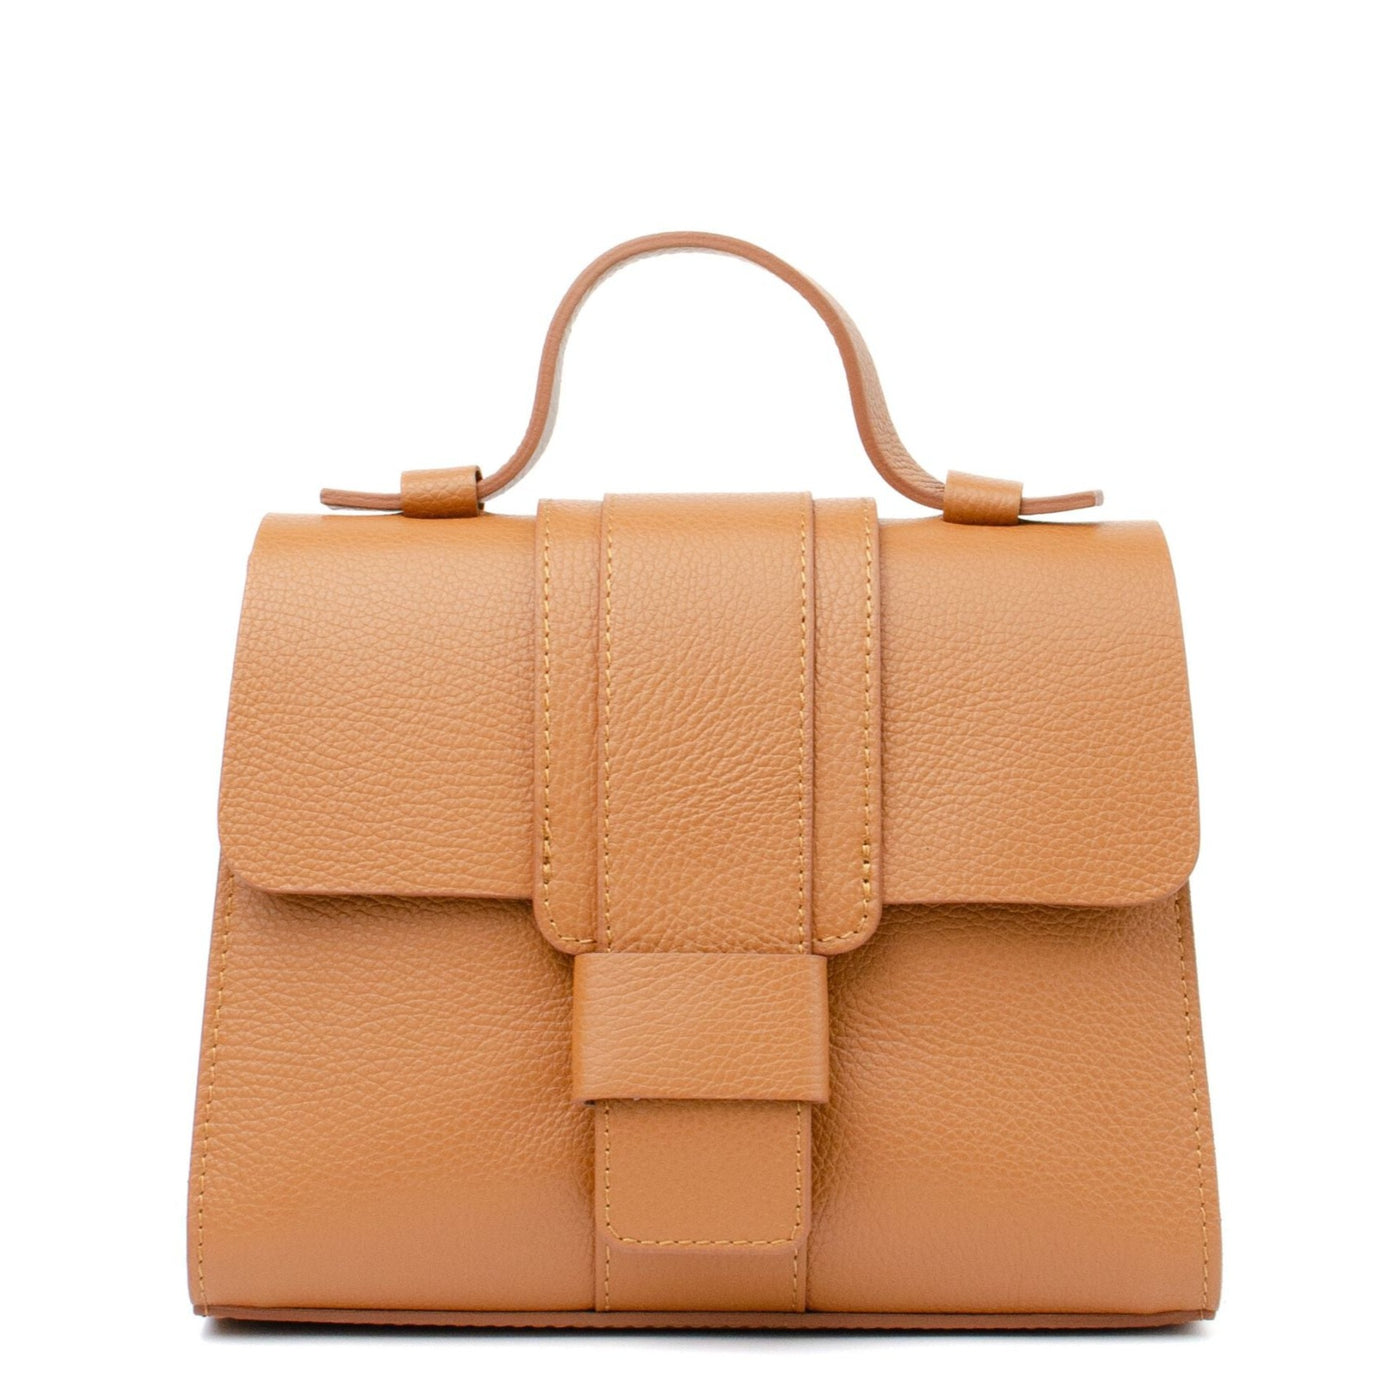 Leather bag "Parma", Brown